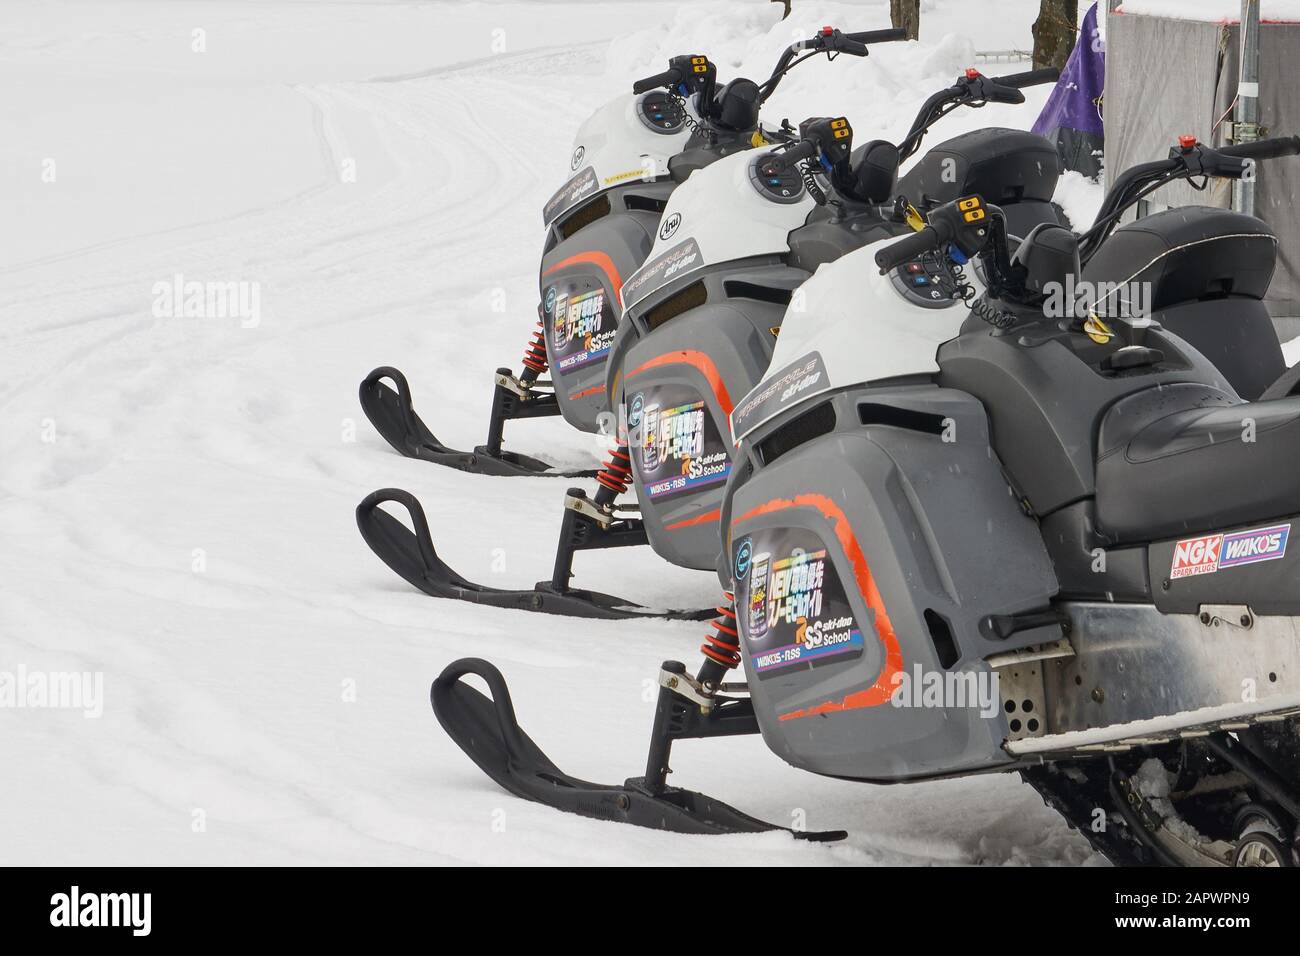 https://c8.alamy.com/comp/2APWPN9/three-snowmobiles-snow-machine-motor-sled-motor-sledge-skimobile-snowscooter-sled-or-ski-doo-lined-up-on-snow-in-japan-2APWPN9.jpg